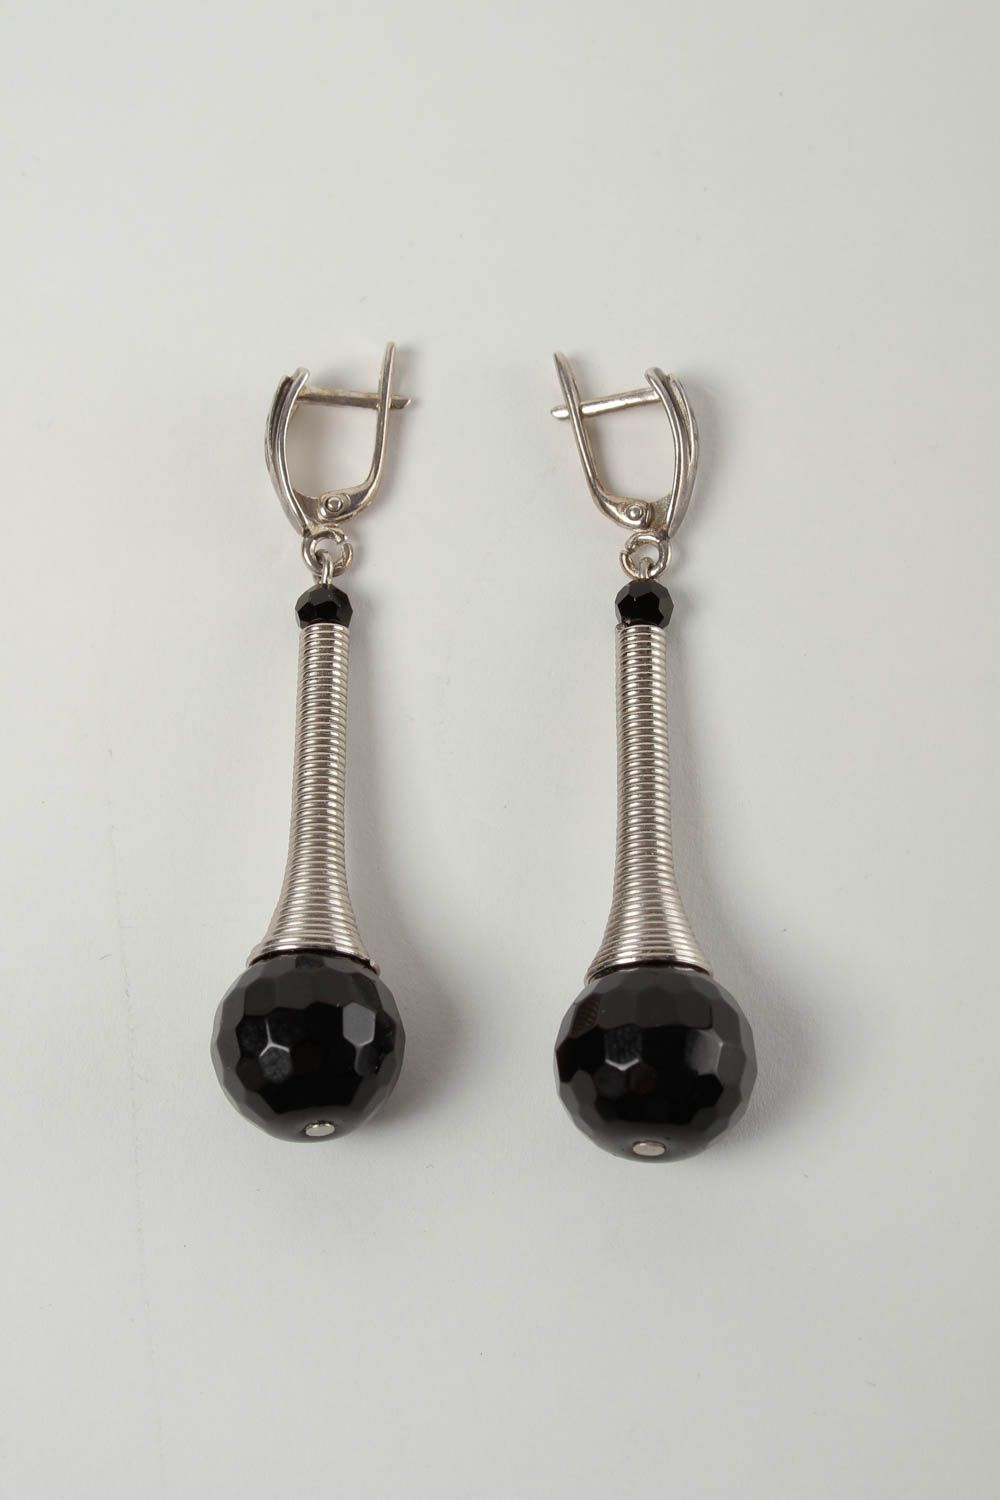 Handmade beautiful earrings designer stylish earrings elegant jewelry photo 1